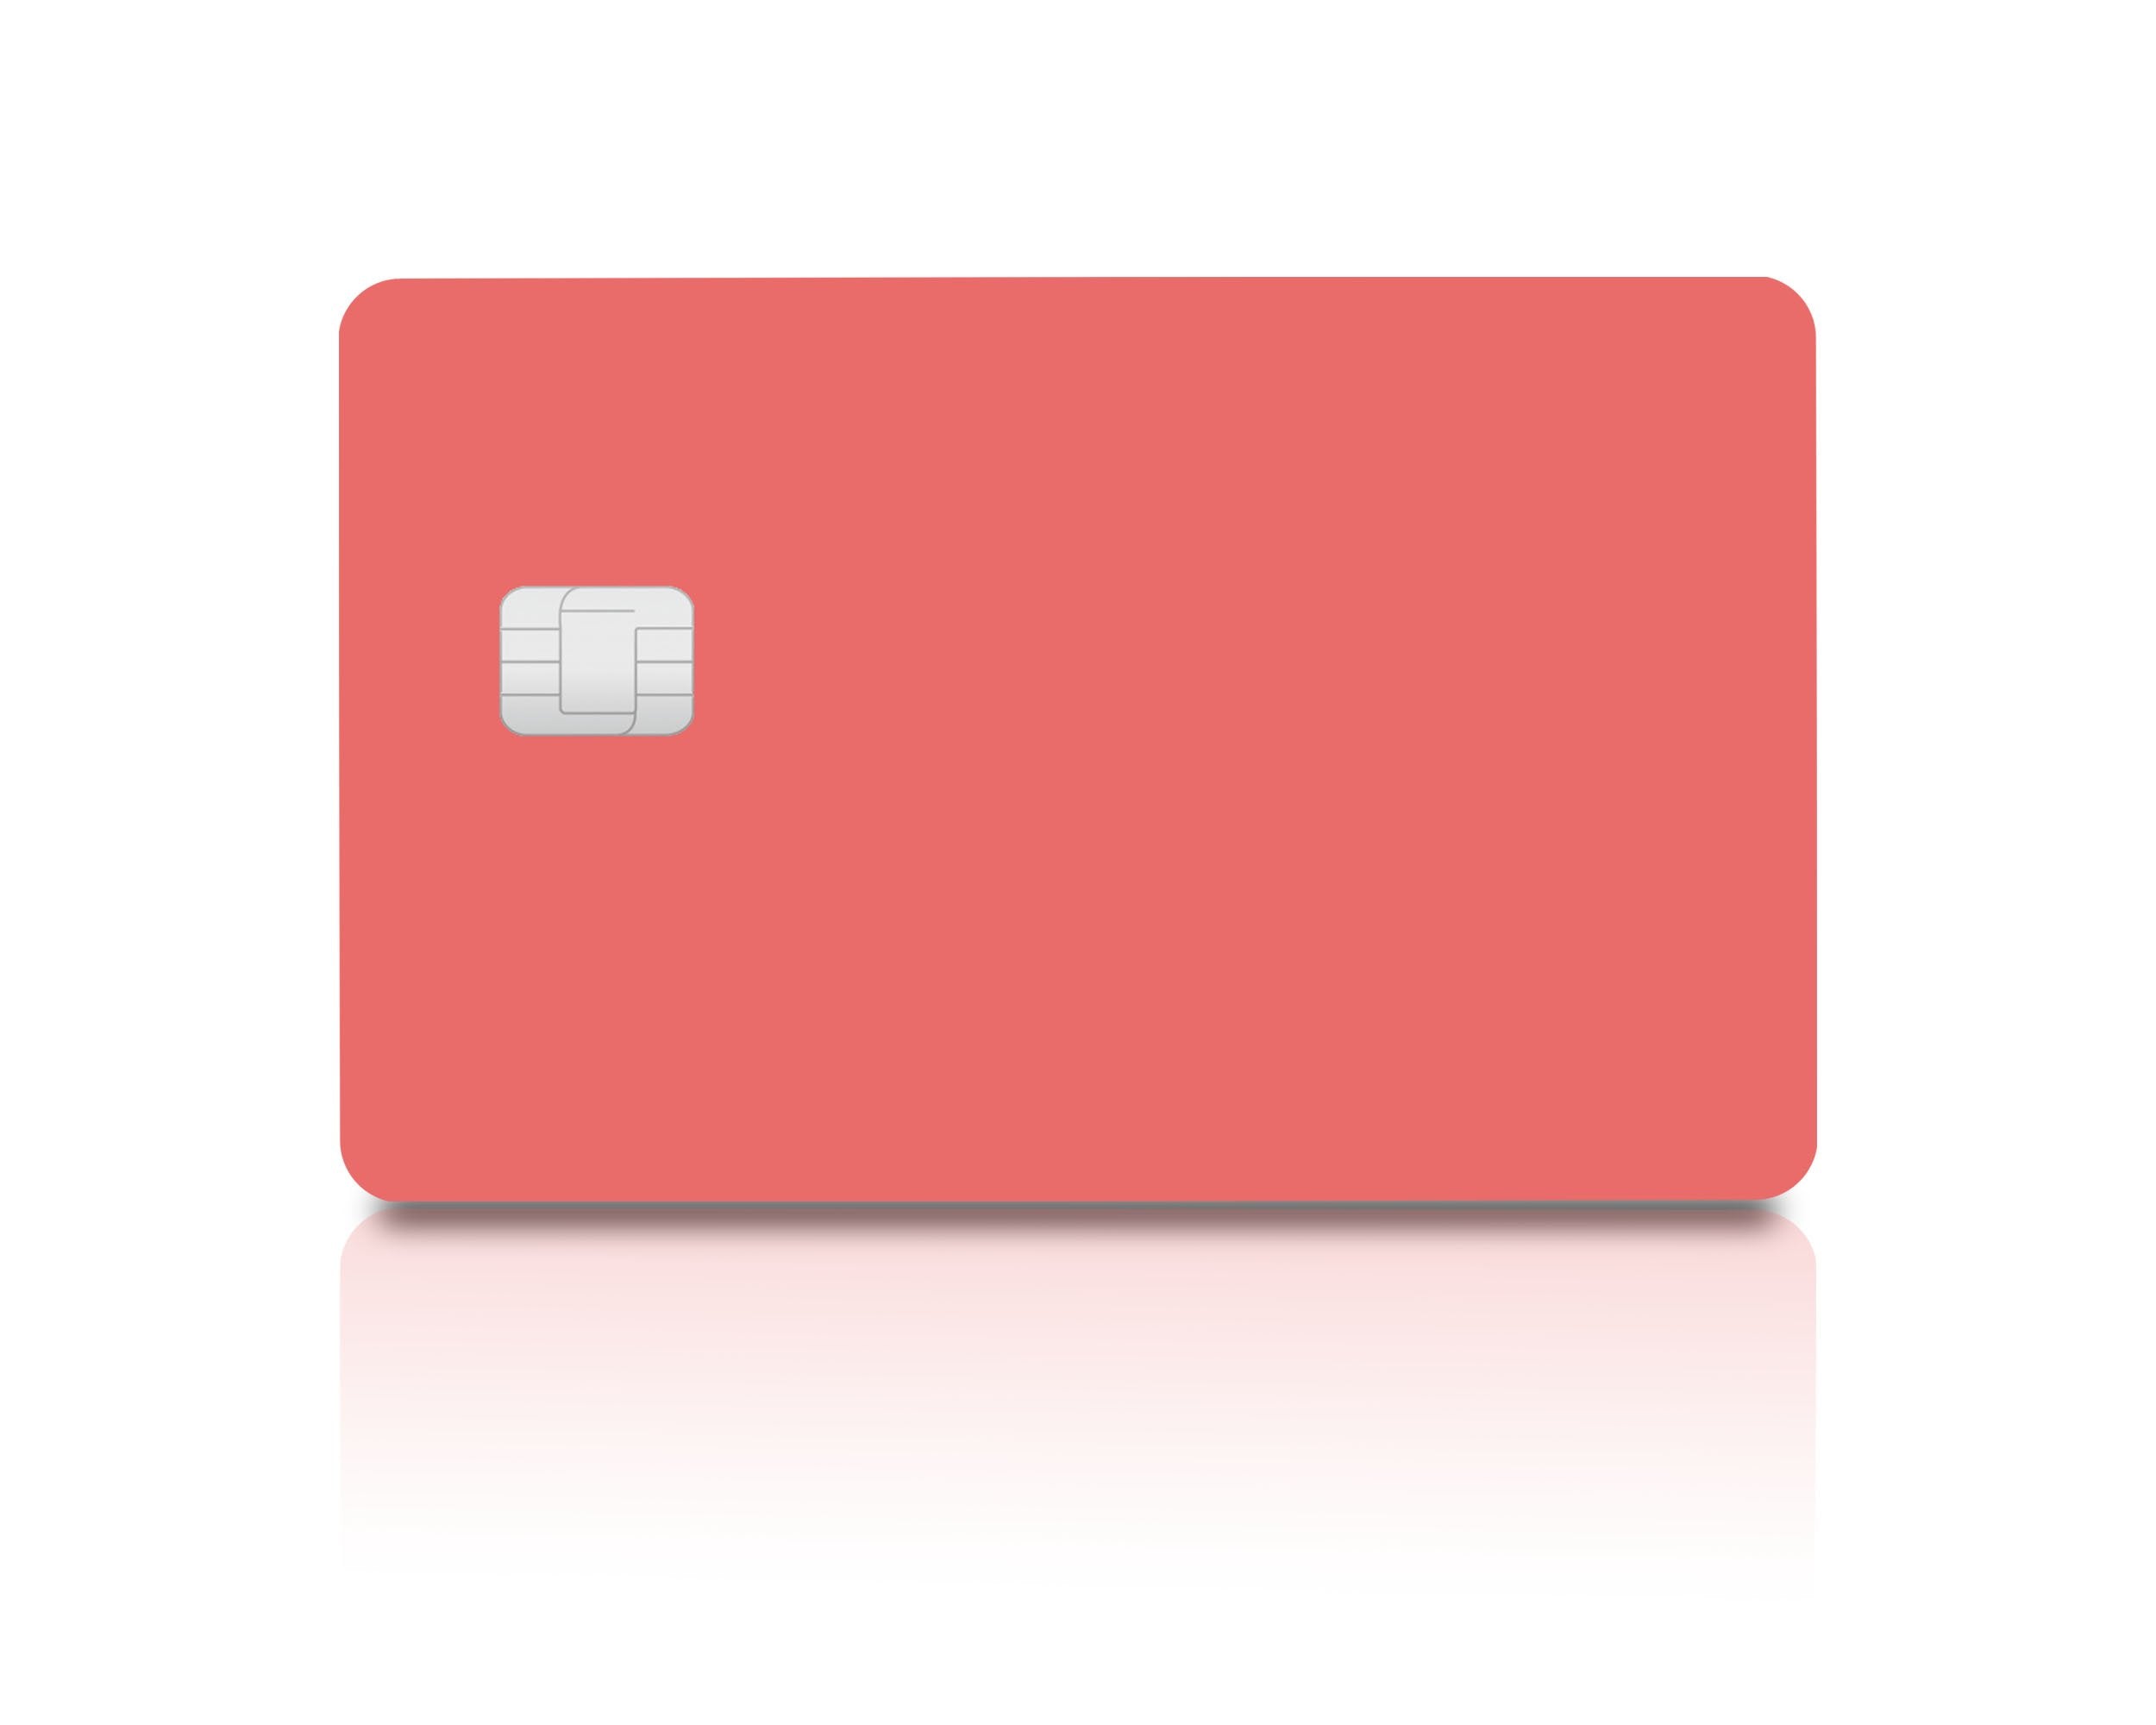 Wrapcart 8 cm Red LV Debit/Credit Card Skin Window Cut - Square